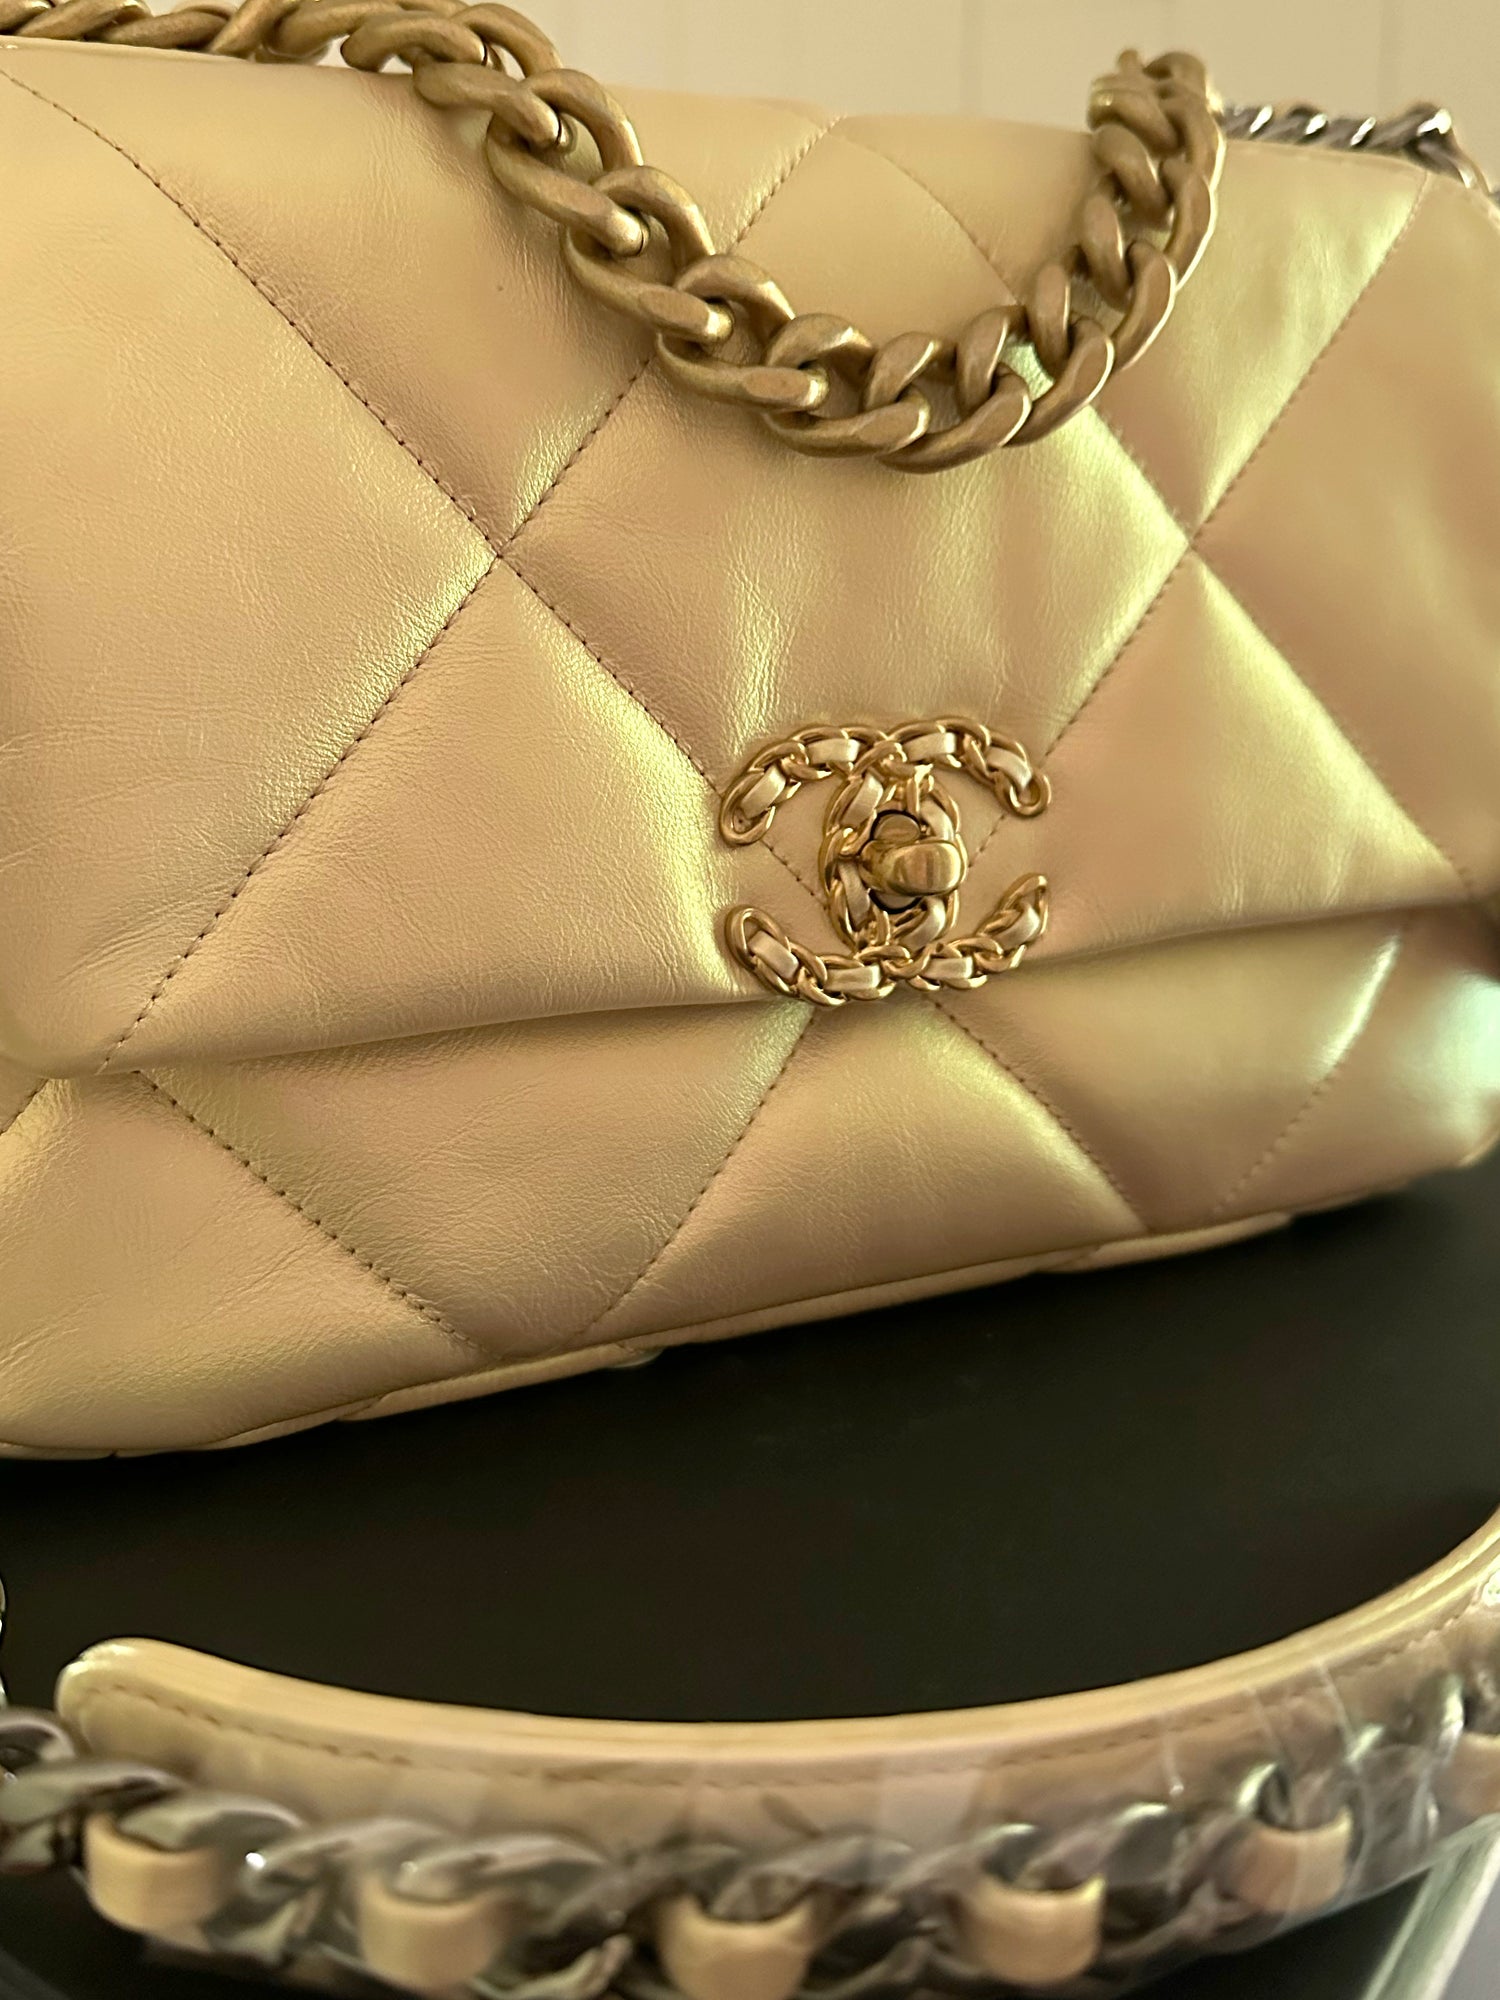 Chanel Lambskin Chanel 19 Medium Flap Bag Light Beige